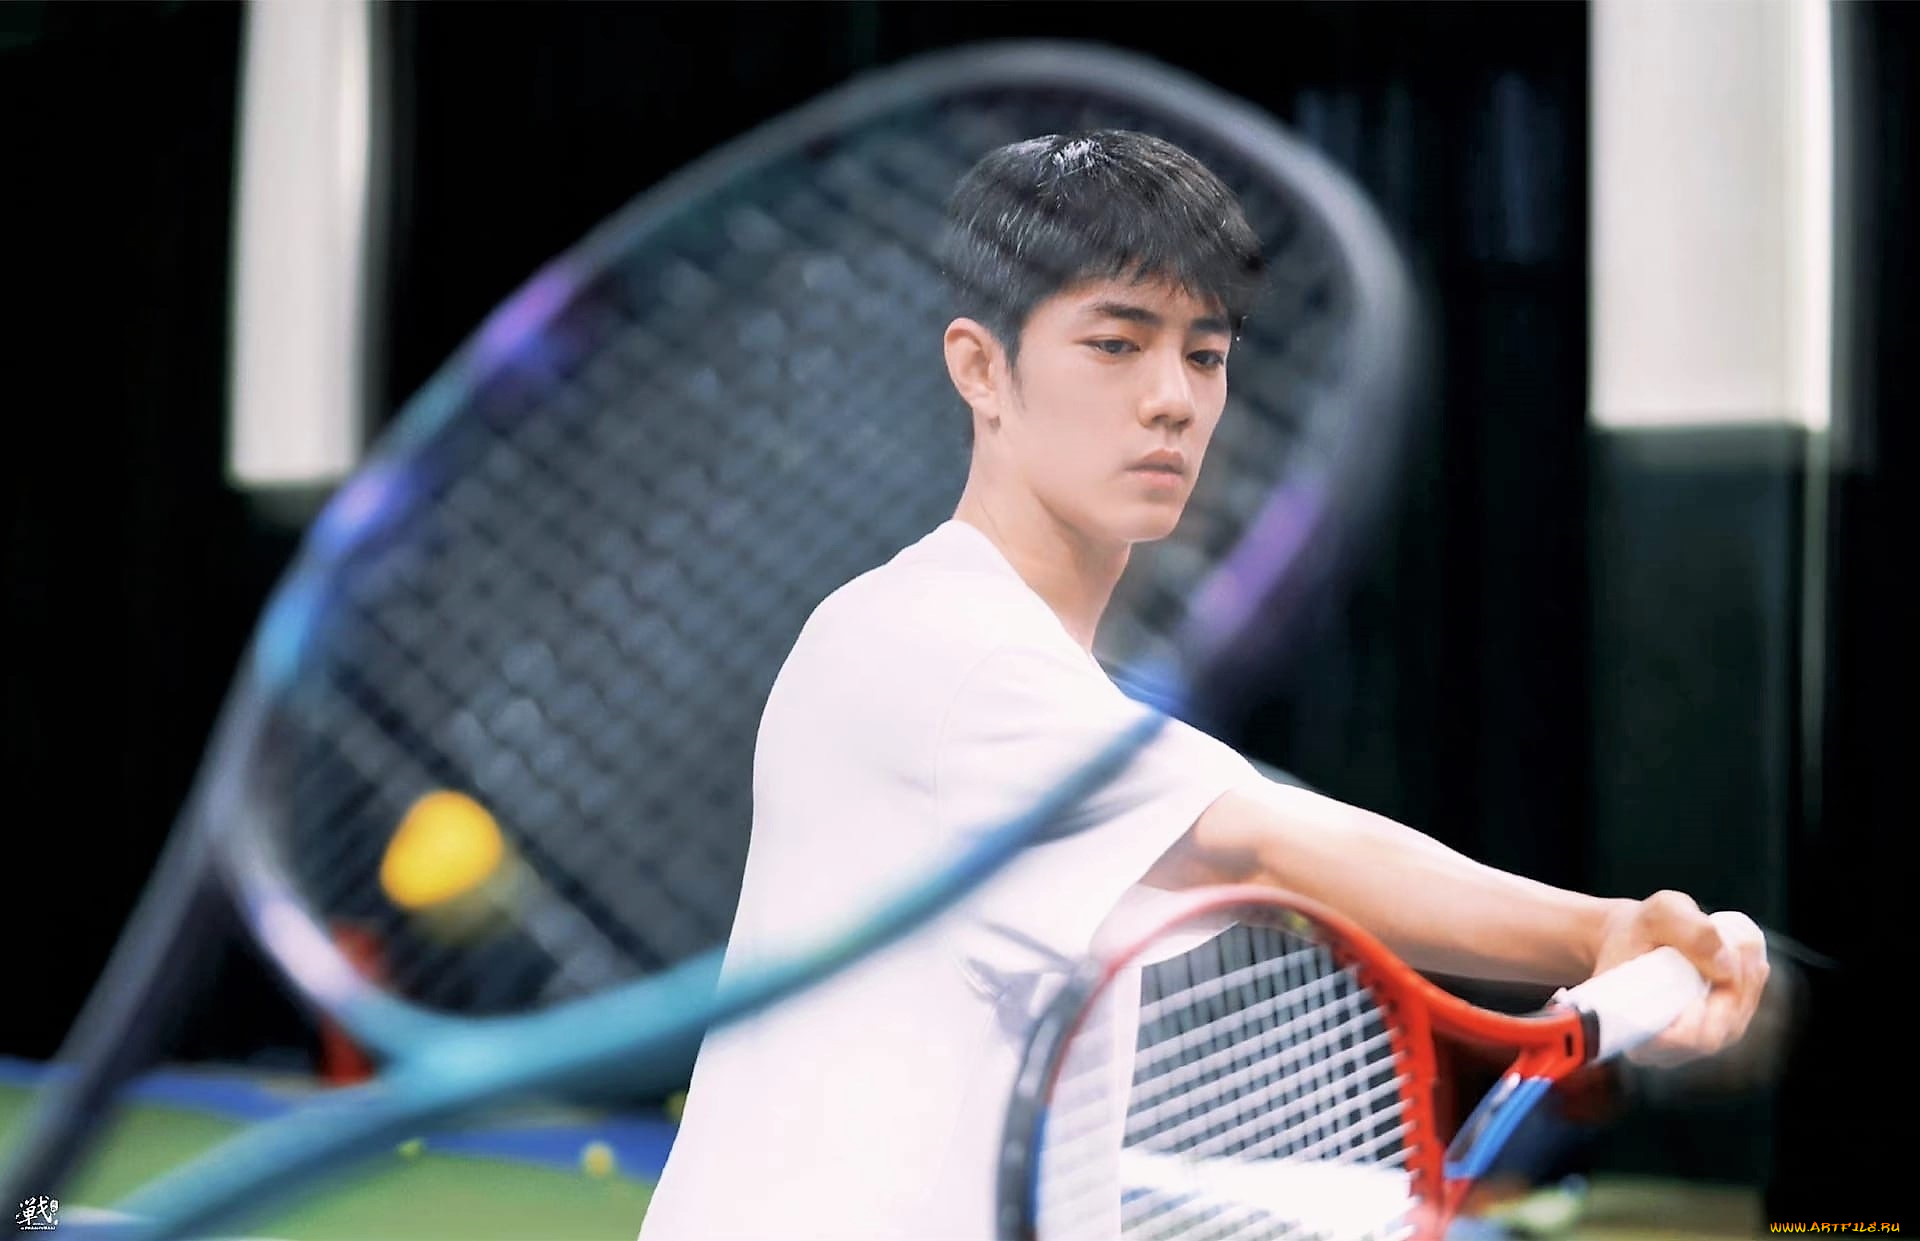 мужчины, xiao, zhan, актер, ракетка, теннис